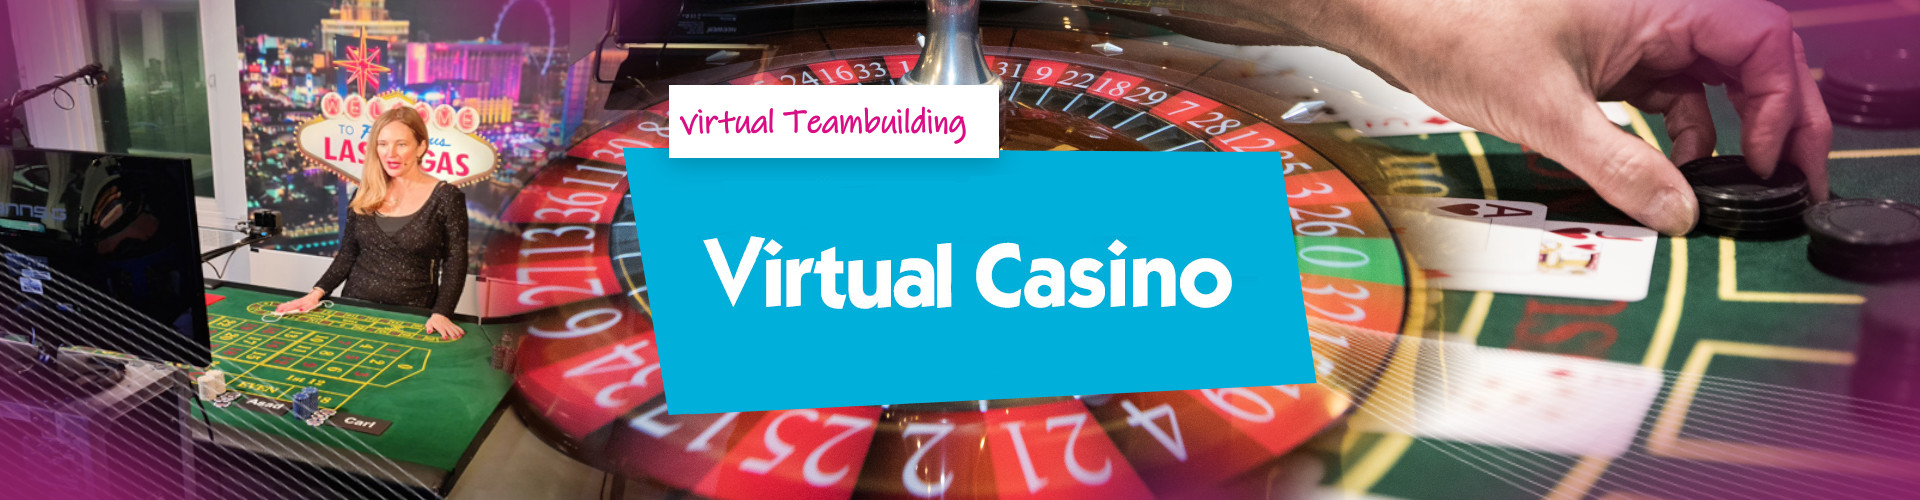 Virtual Casino banner